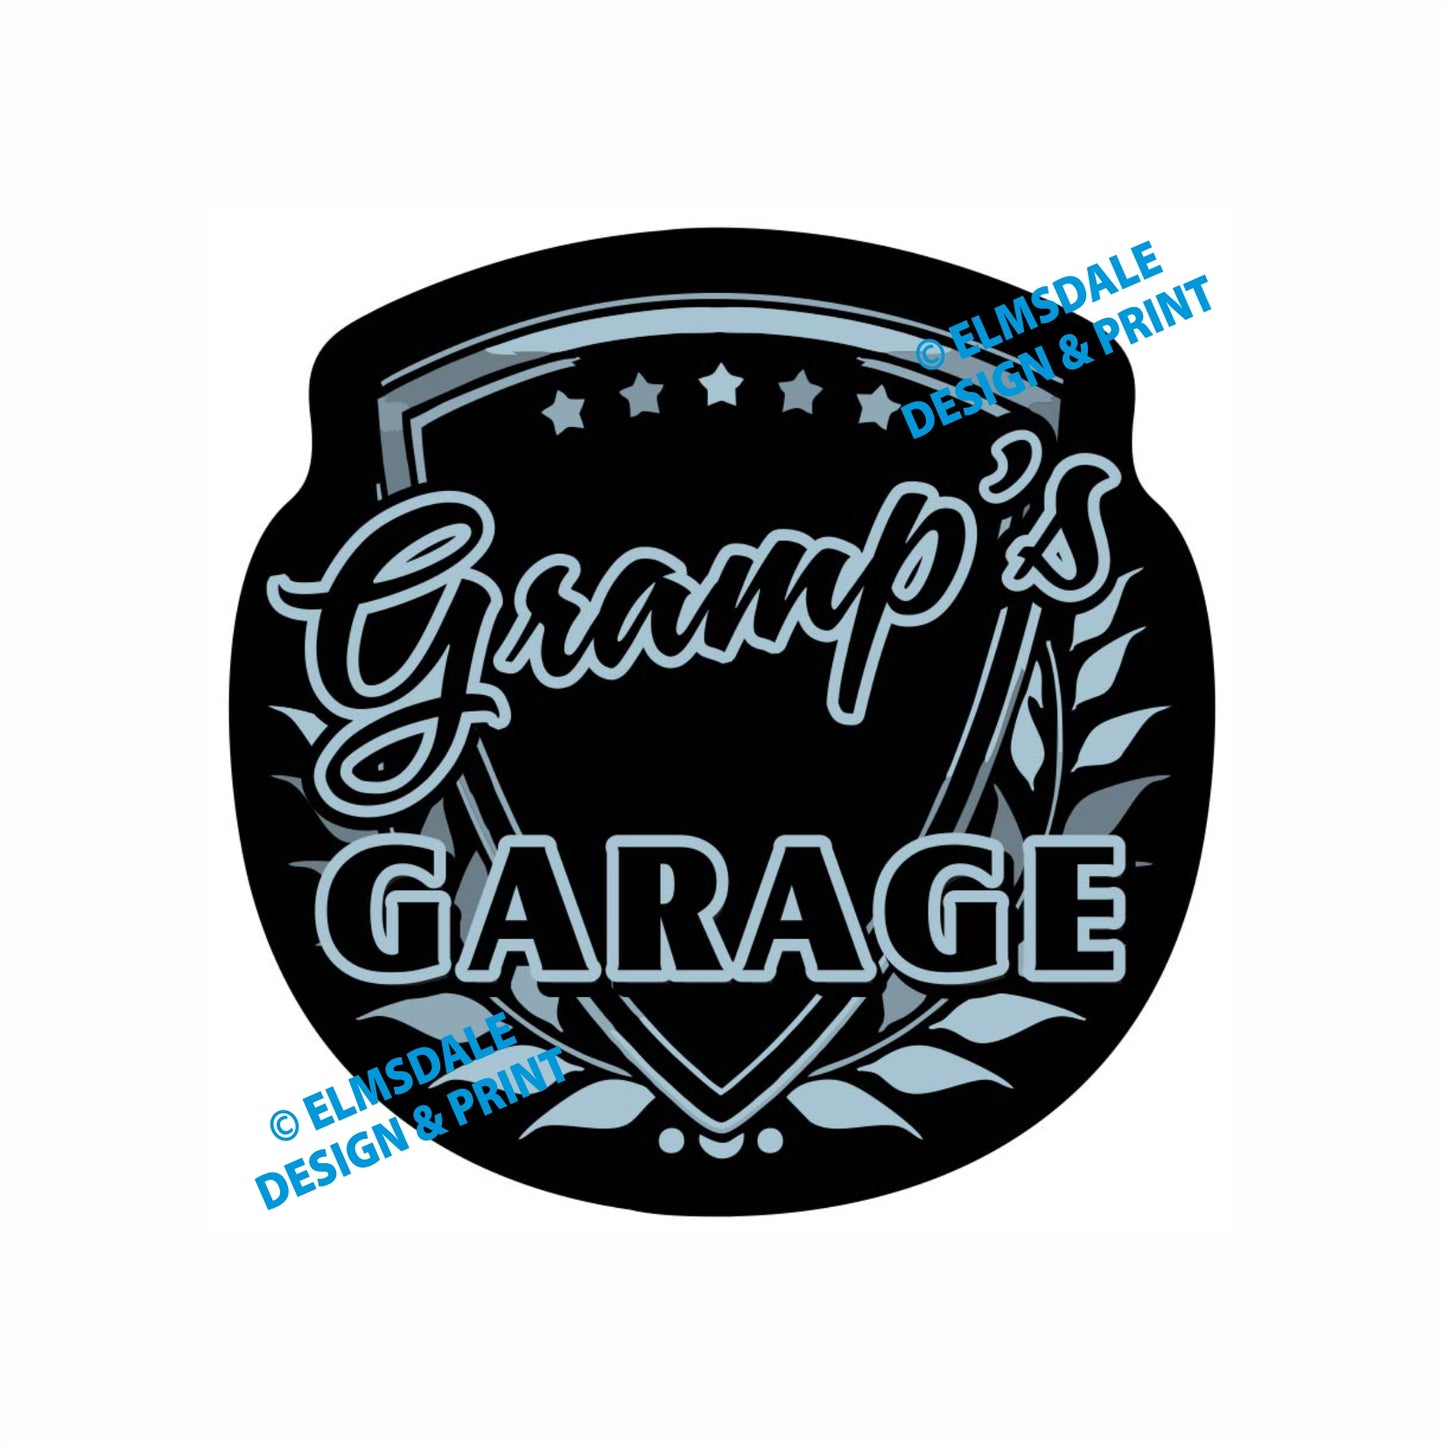 Gramps Garage